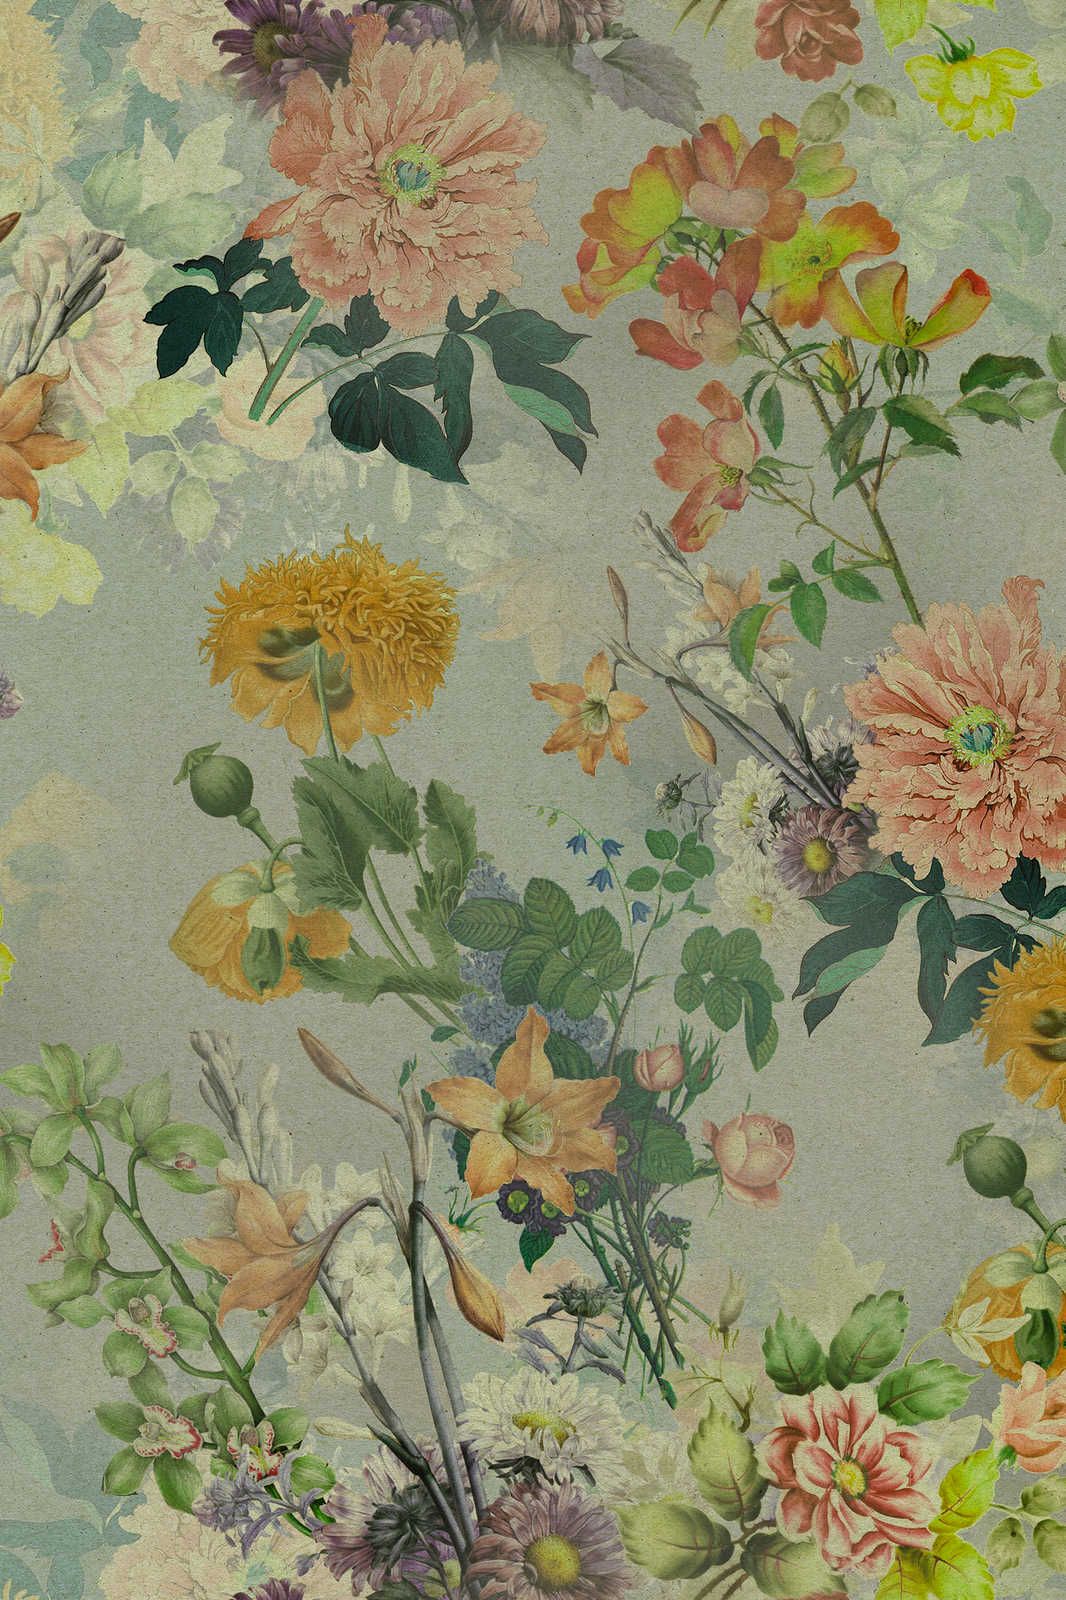             Amelies Home 2 - Quadro in tela Flowers fiori colorati in stile country - 0,90 m x 0,60 m
        